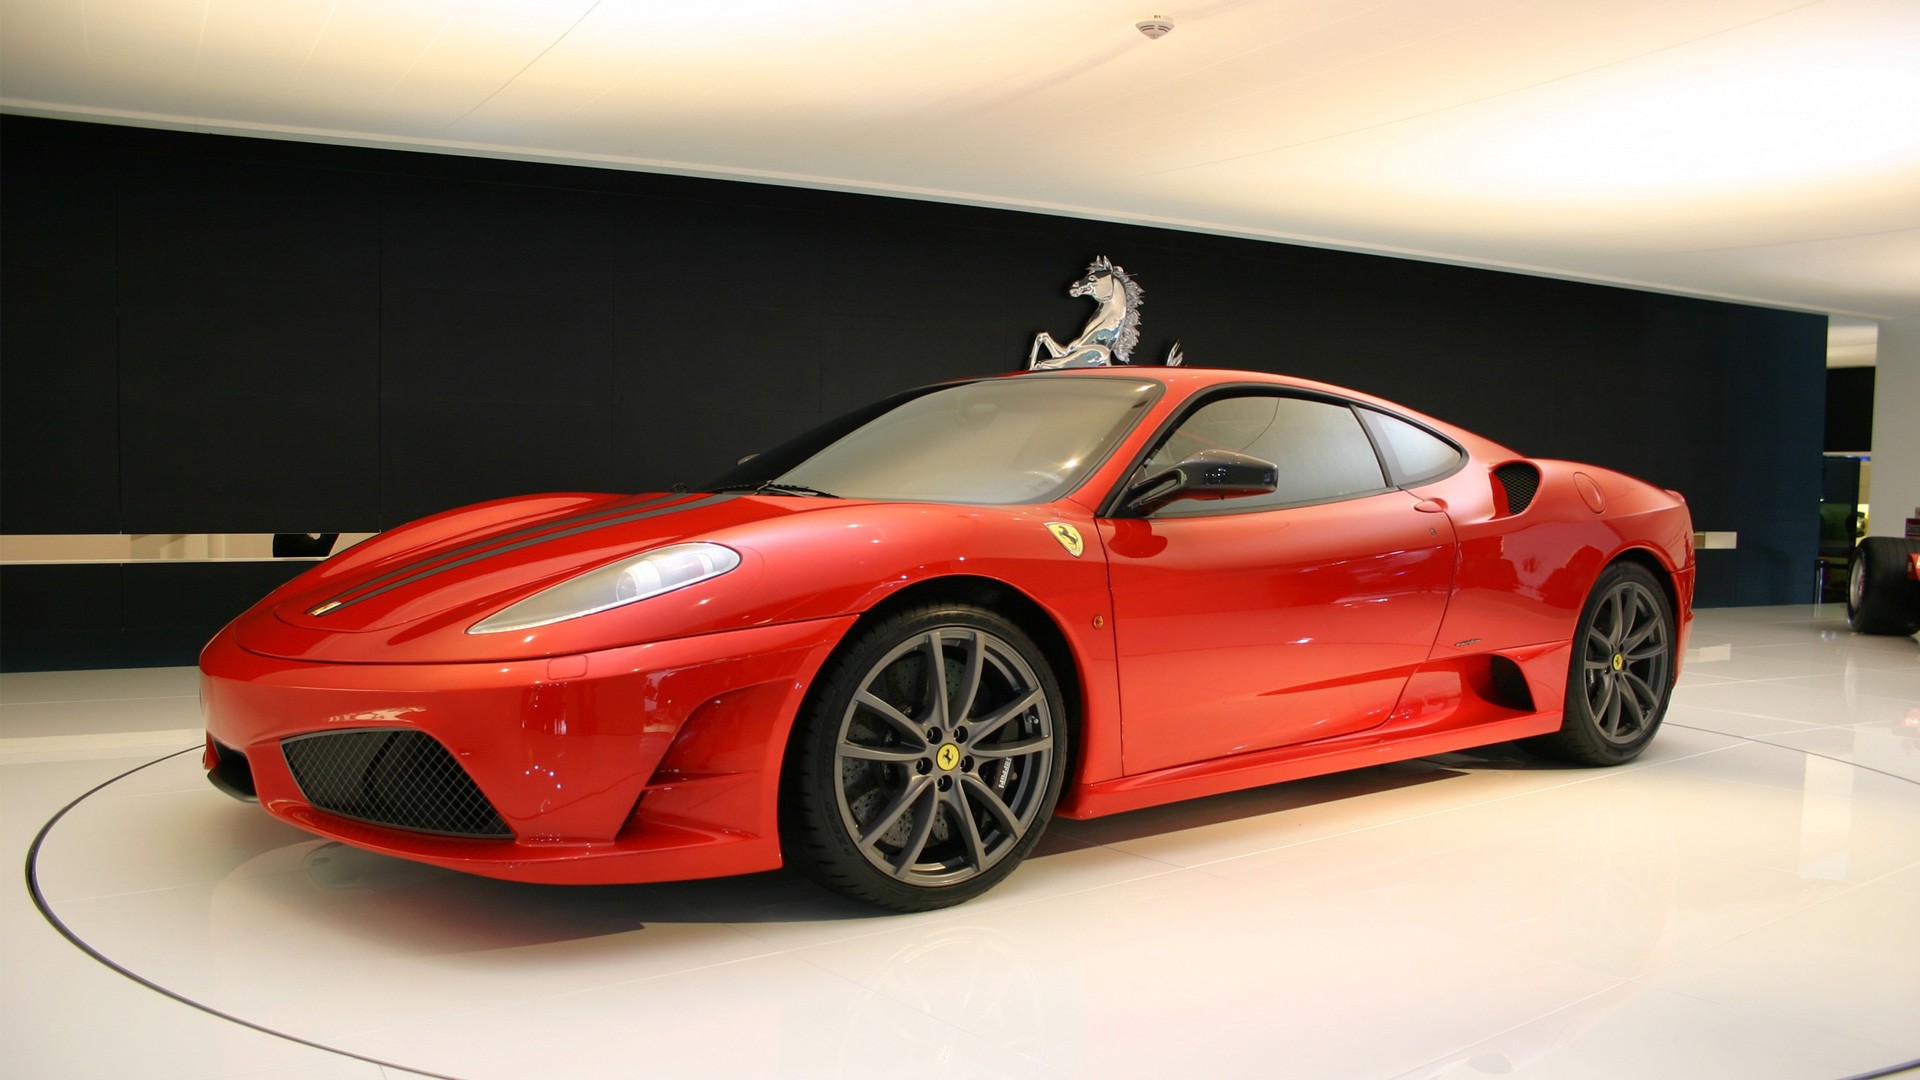 Красный ferrari. Ferrari f430 Red. Ferrari f430 Red car. Феррари ф500. Ferrari f430 Red Sport car.